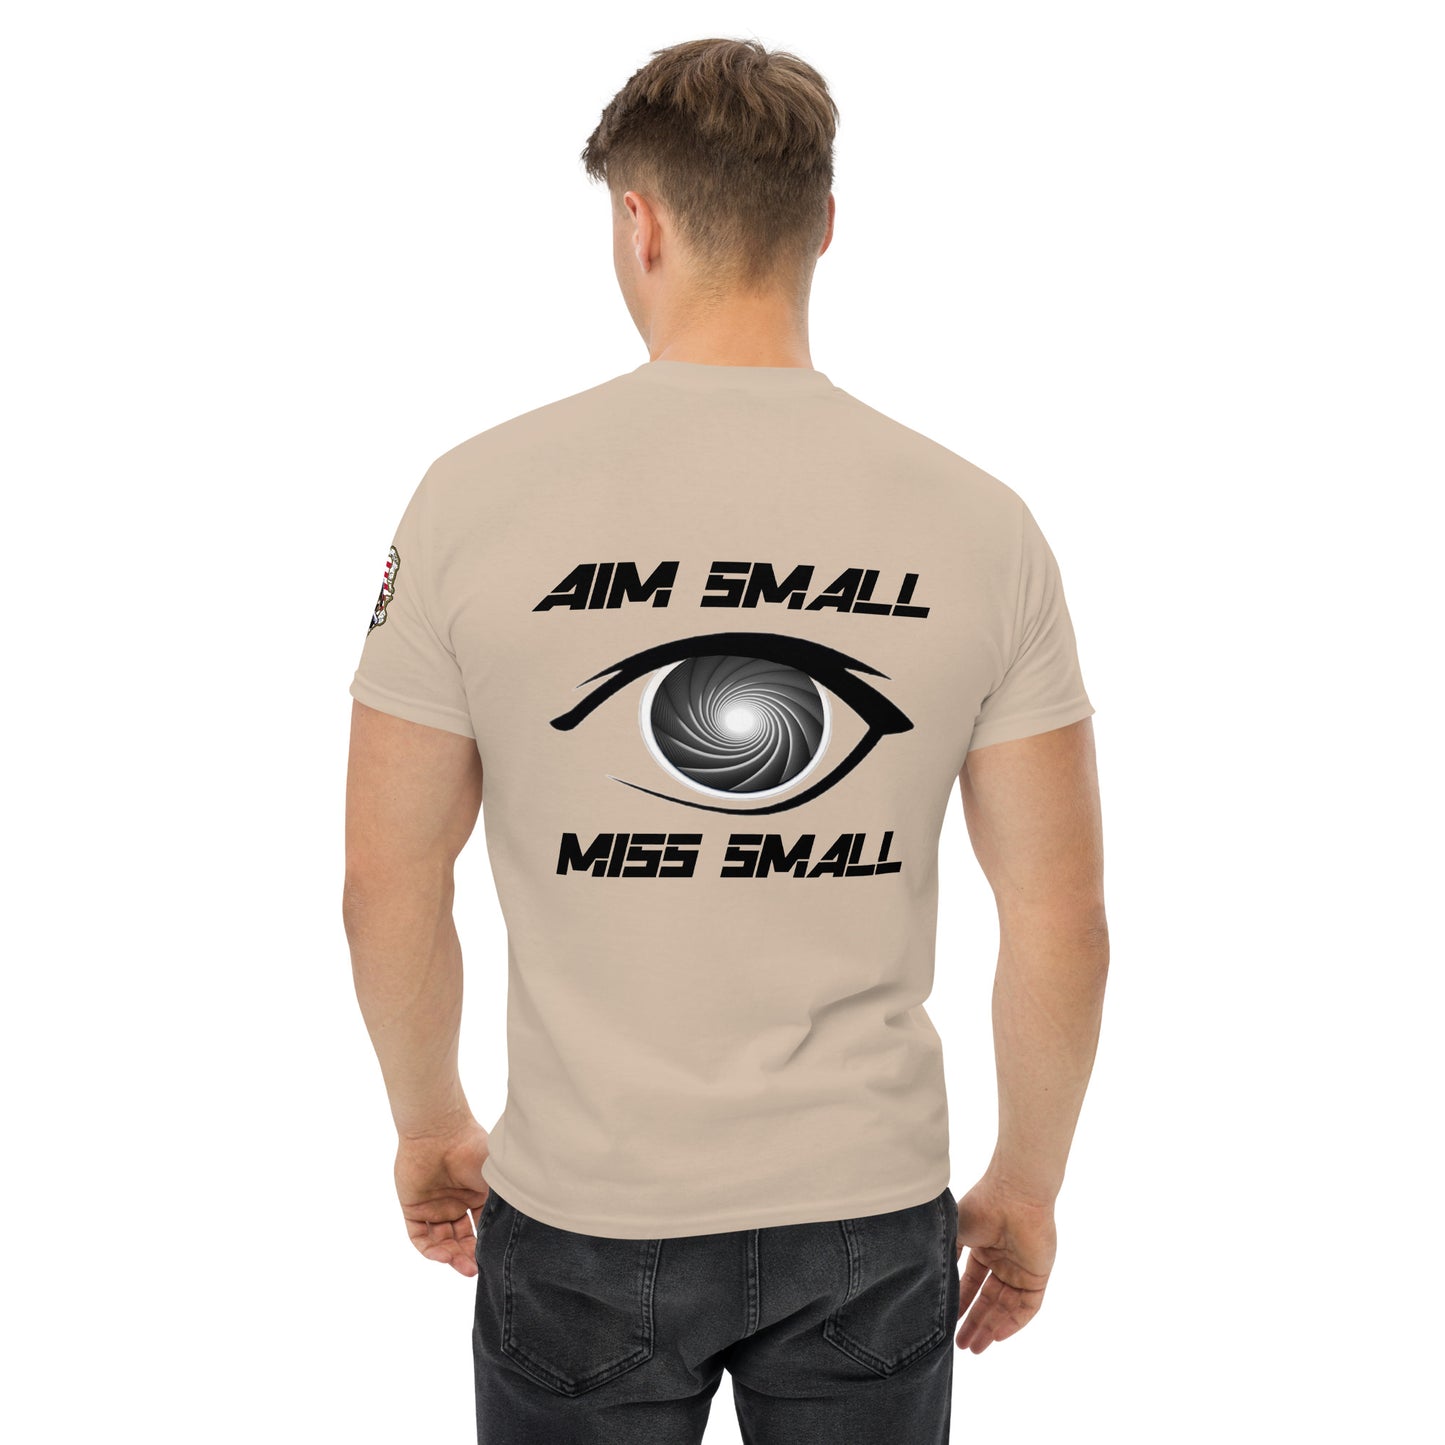 Aim Small Miss Small